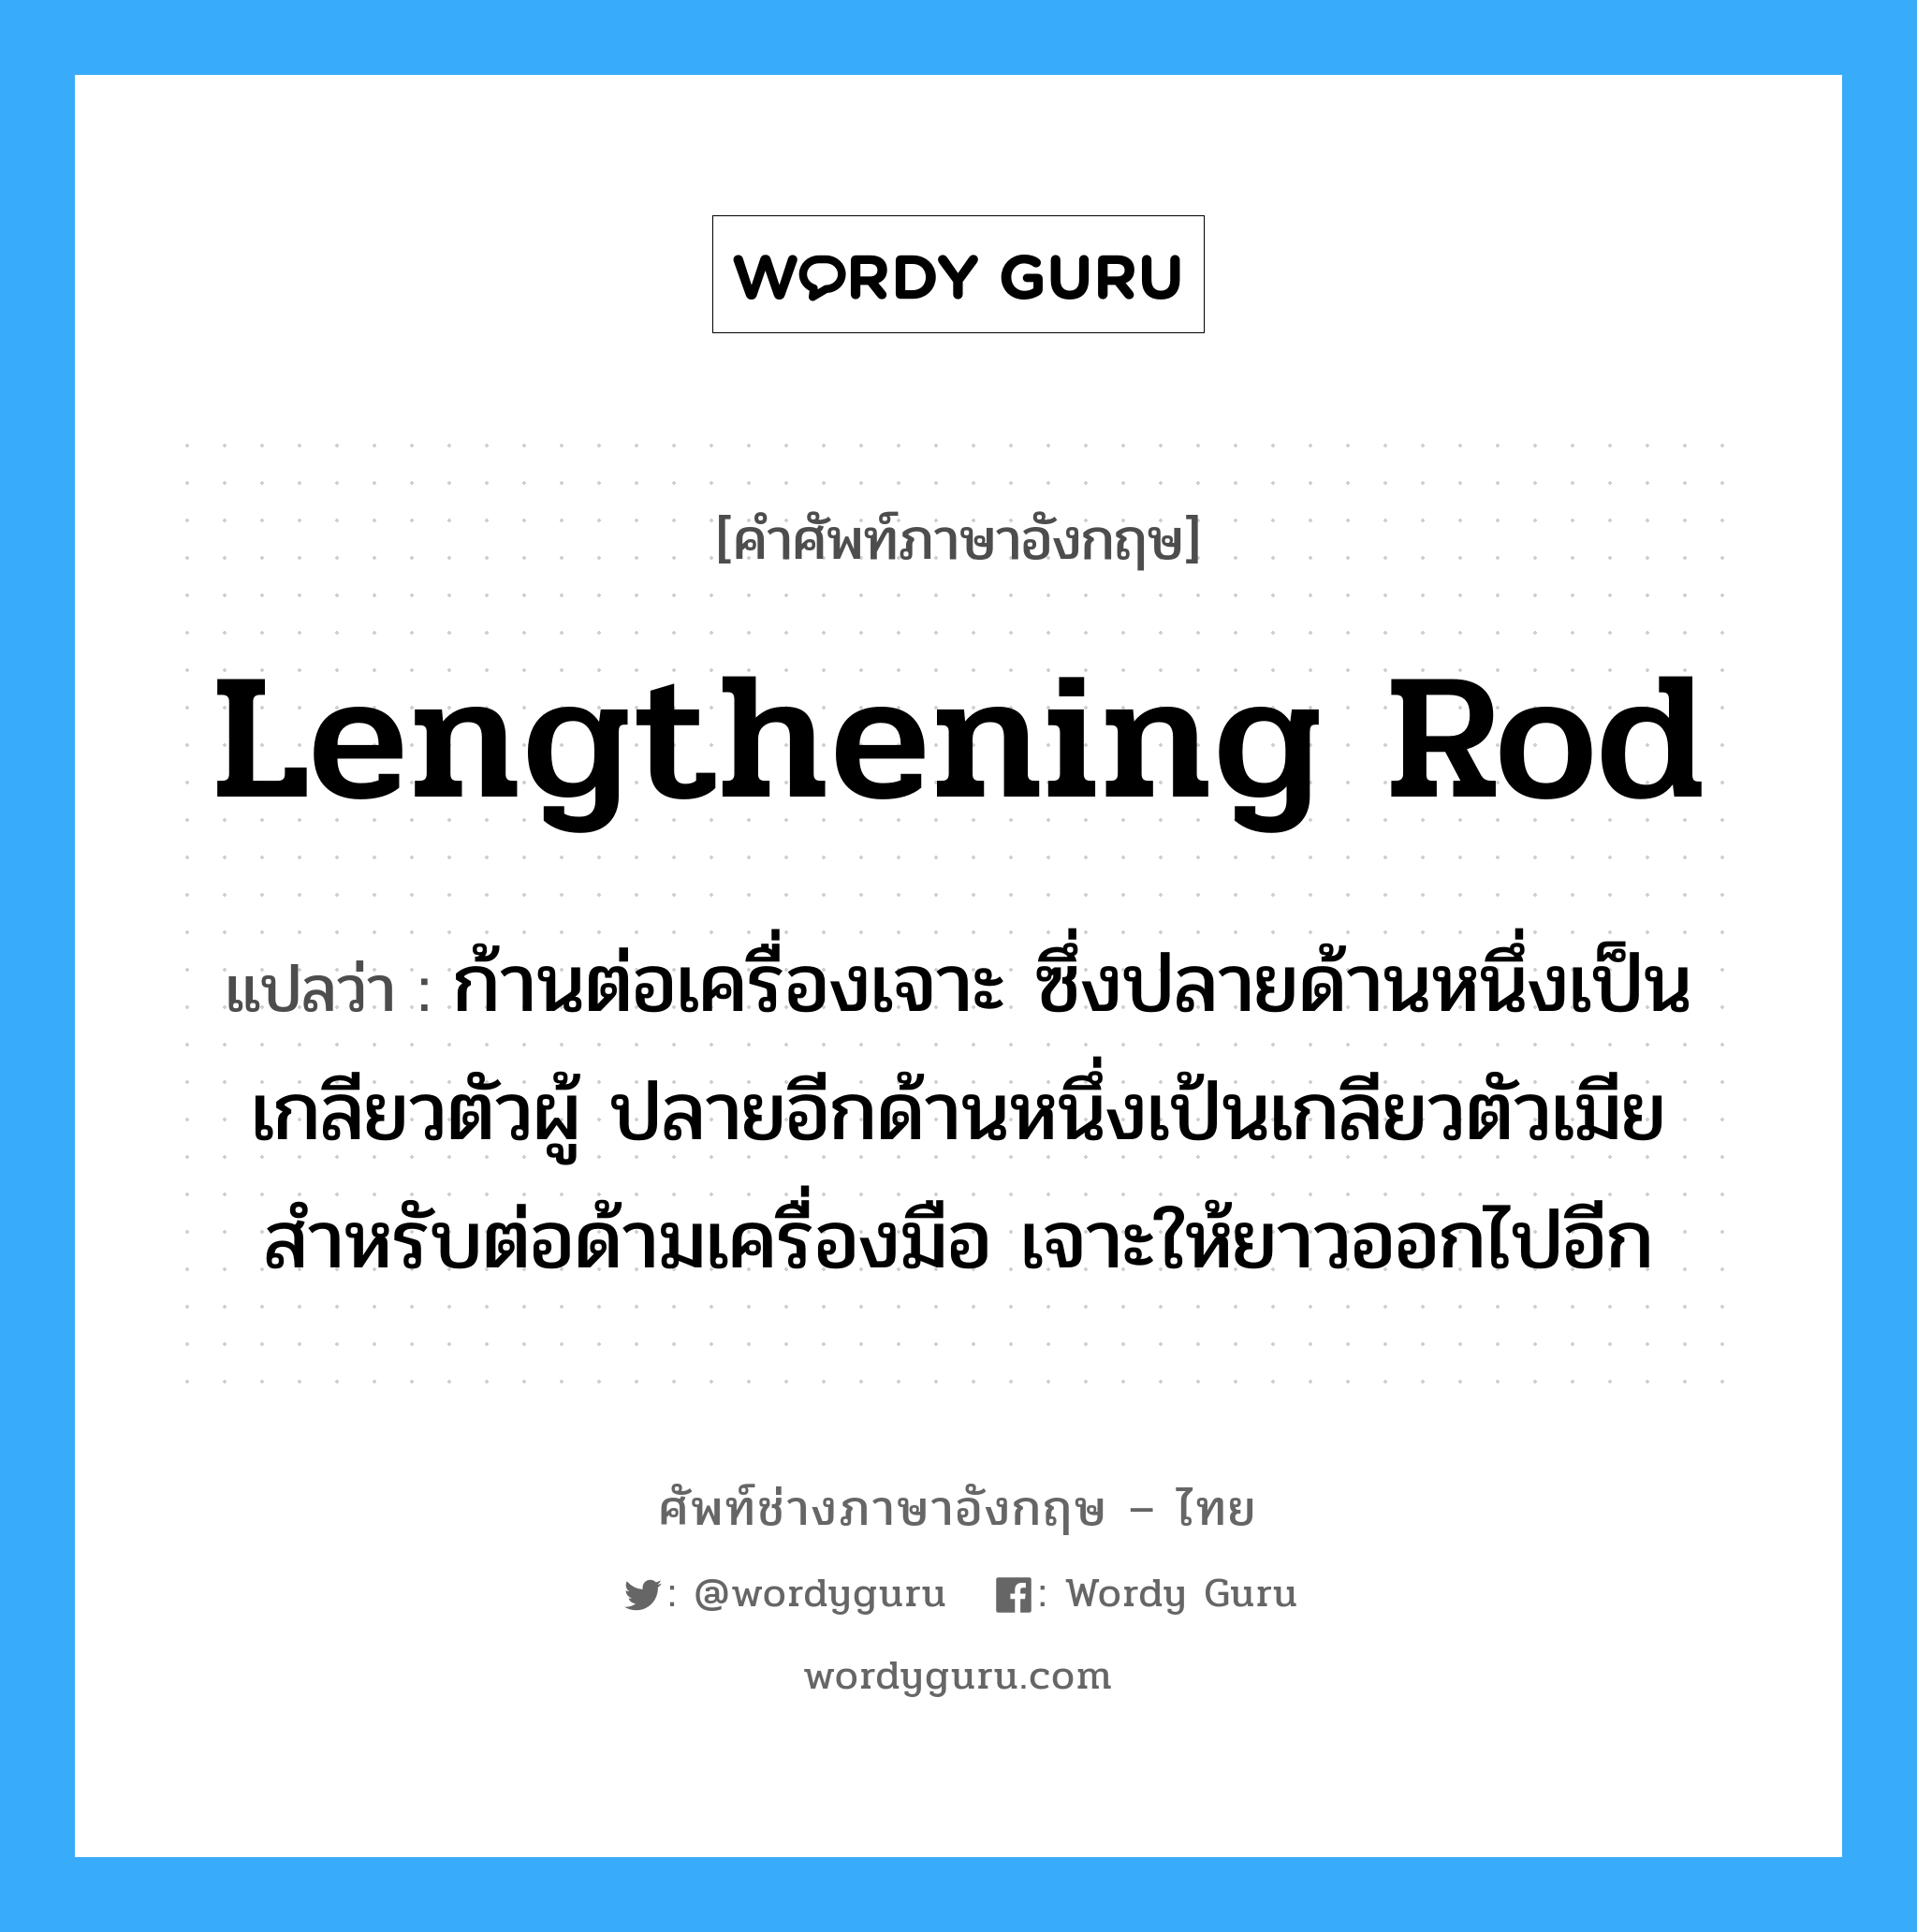 lengthening rod แปลว่า?, คำศัพท์ช่างภาษาอังกฤษ - ไทย lengthening rod คำศัพท์ภาษาอังกฤษ lengthening rod แปลว่า ก้านต่อเครื่องเจาะ ซึ่งปลายด้านหนึ่งเป็นเกลียวตัวผู้ ปลายอีกด้านหนึ่งเป้นเกลียวตัวเมีย สำหรับต่อด้ามเครื่องมือ เจาะให้ยาวออกไปอีก